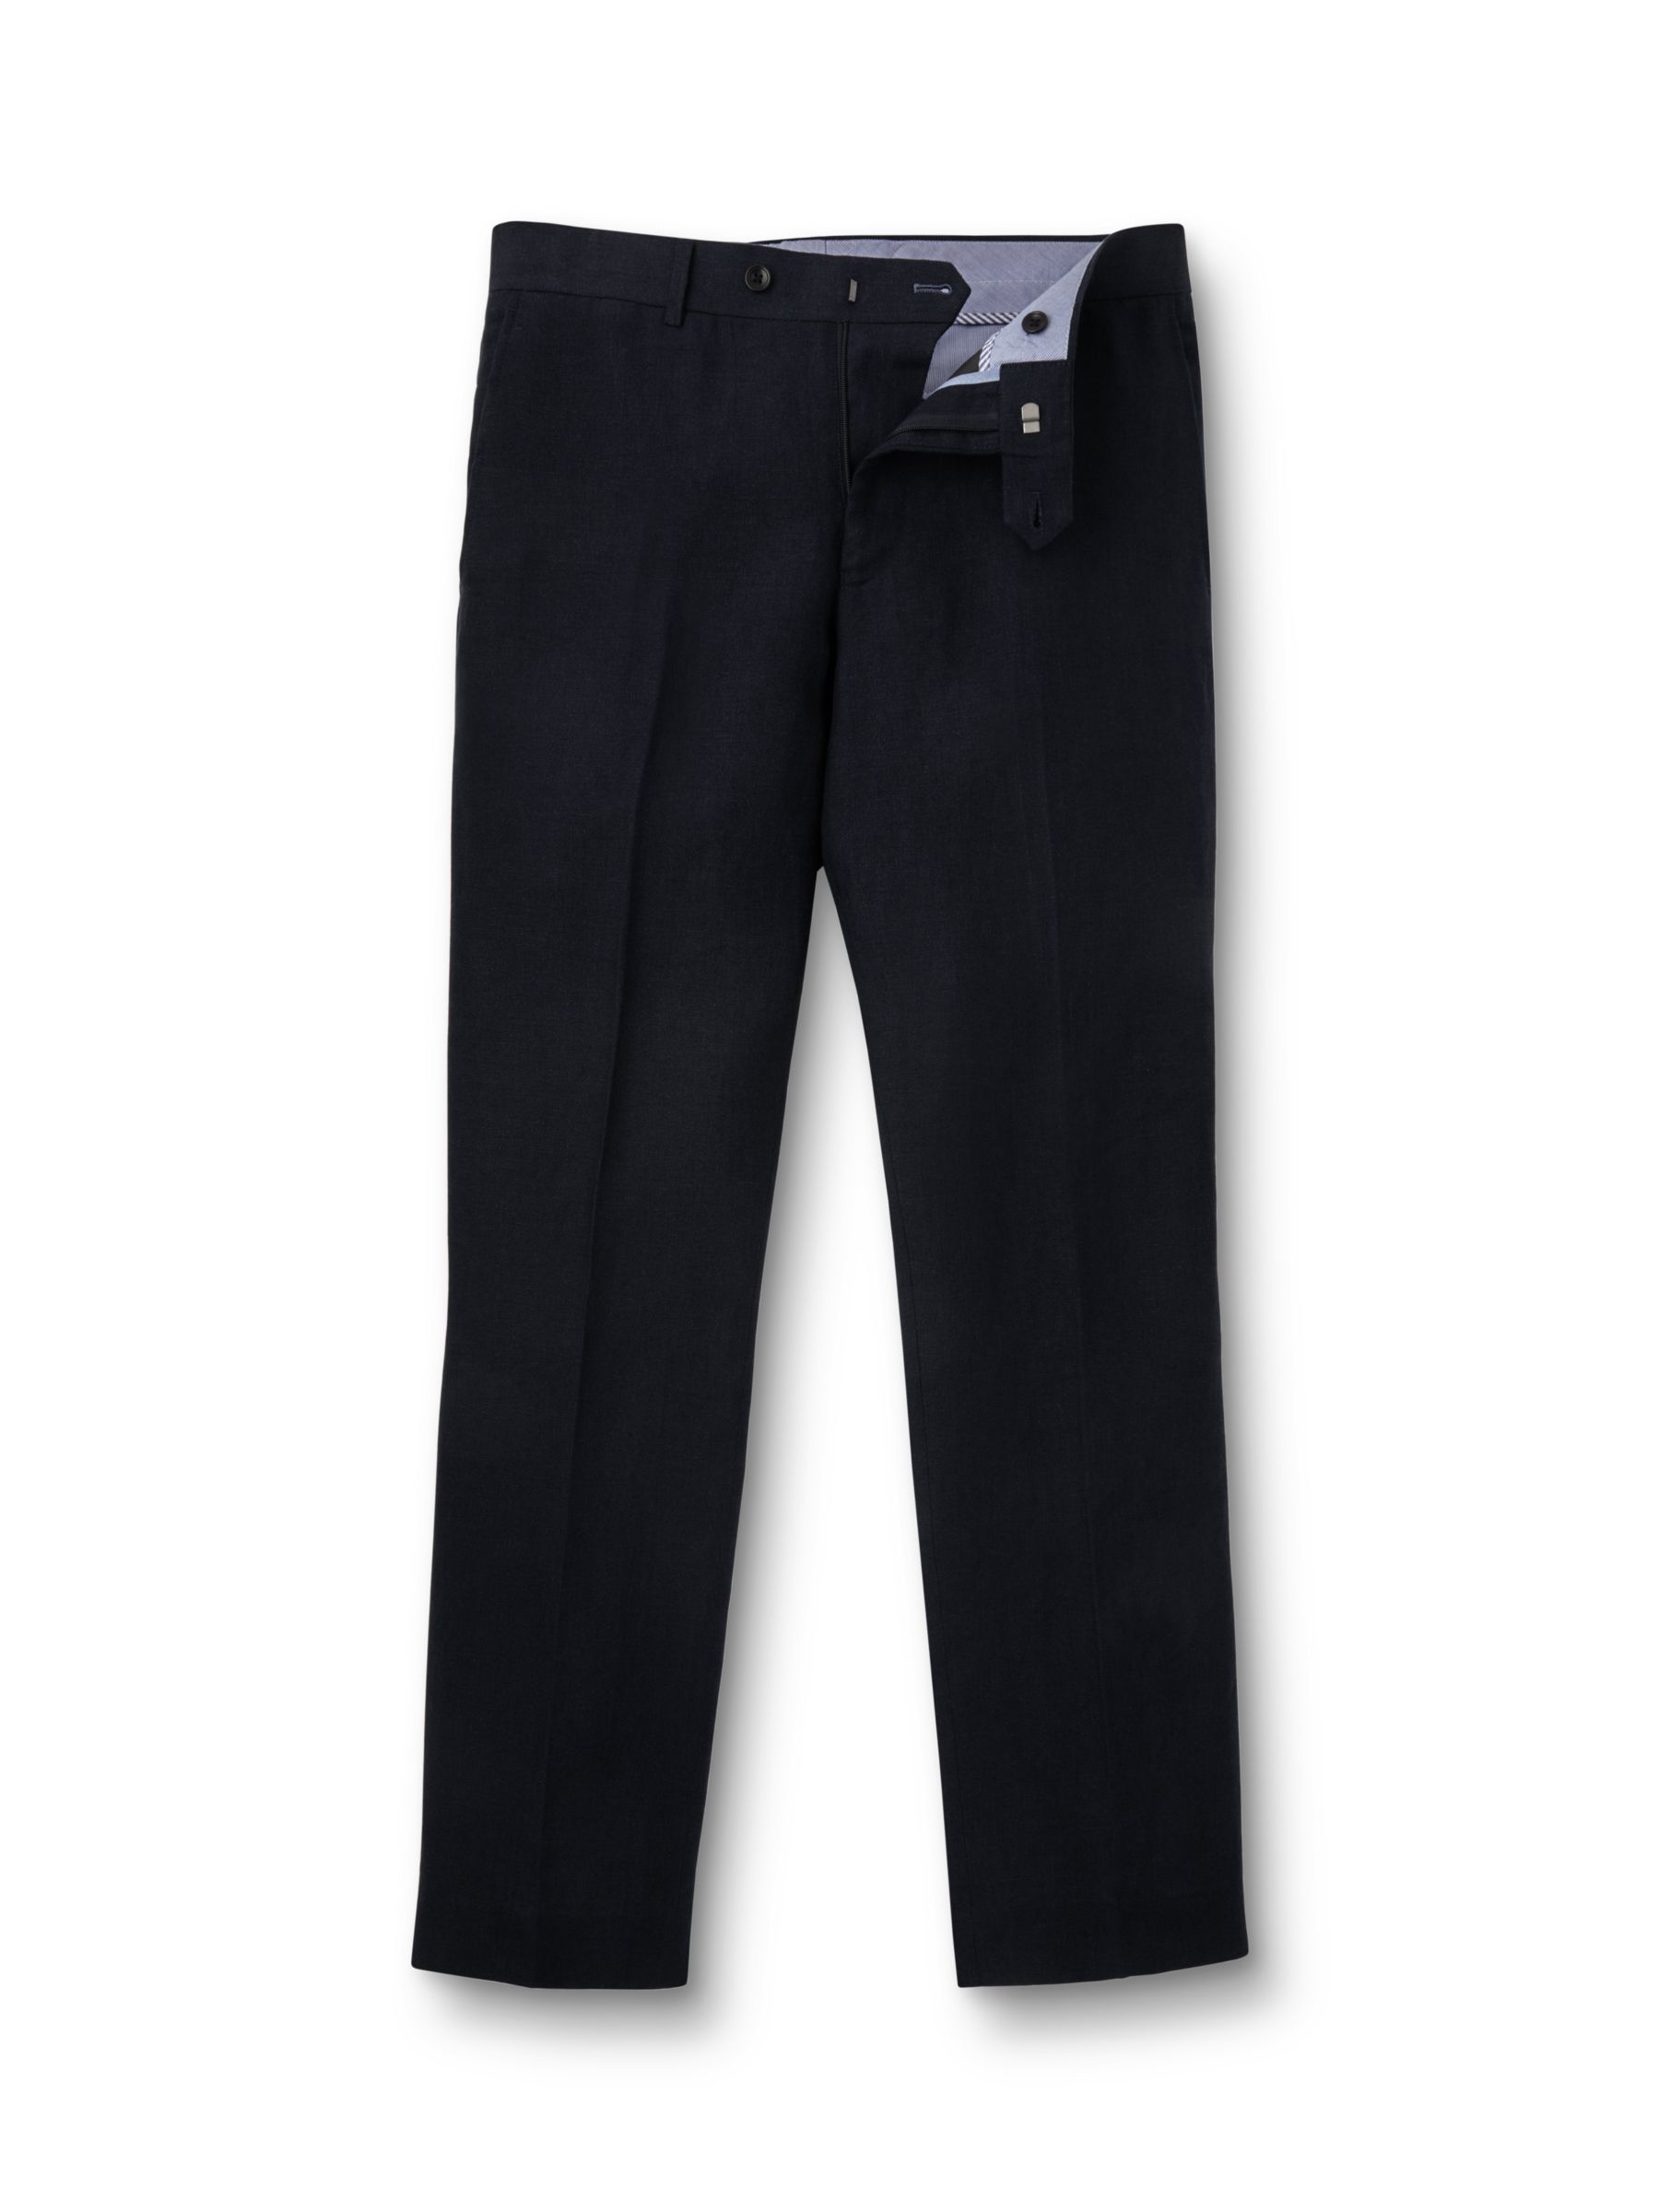 Charles Tyrwhitt Slim Fit Linen Suit Trousers, Dark Navy, W34/L34